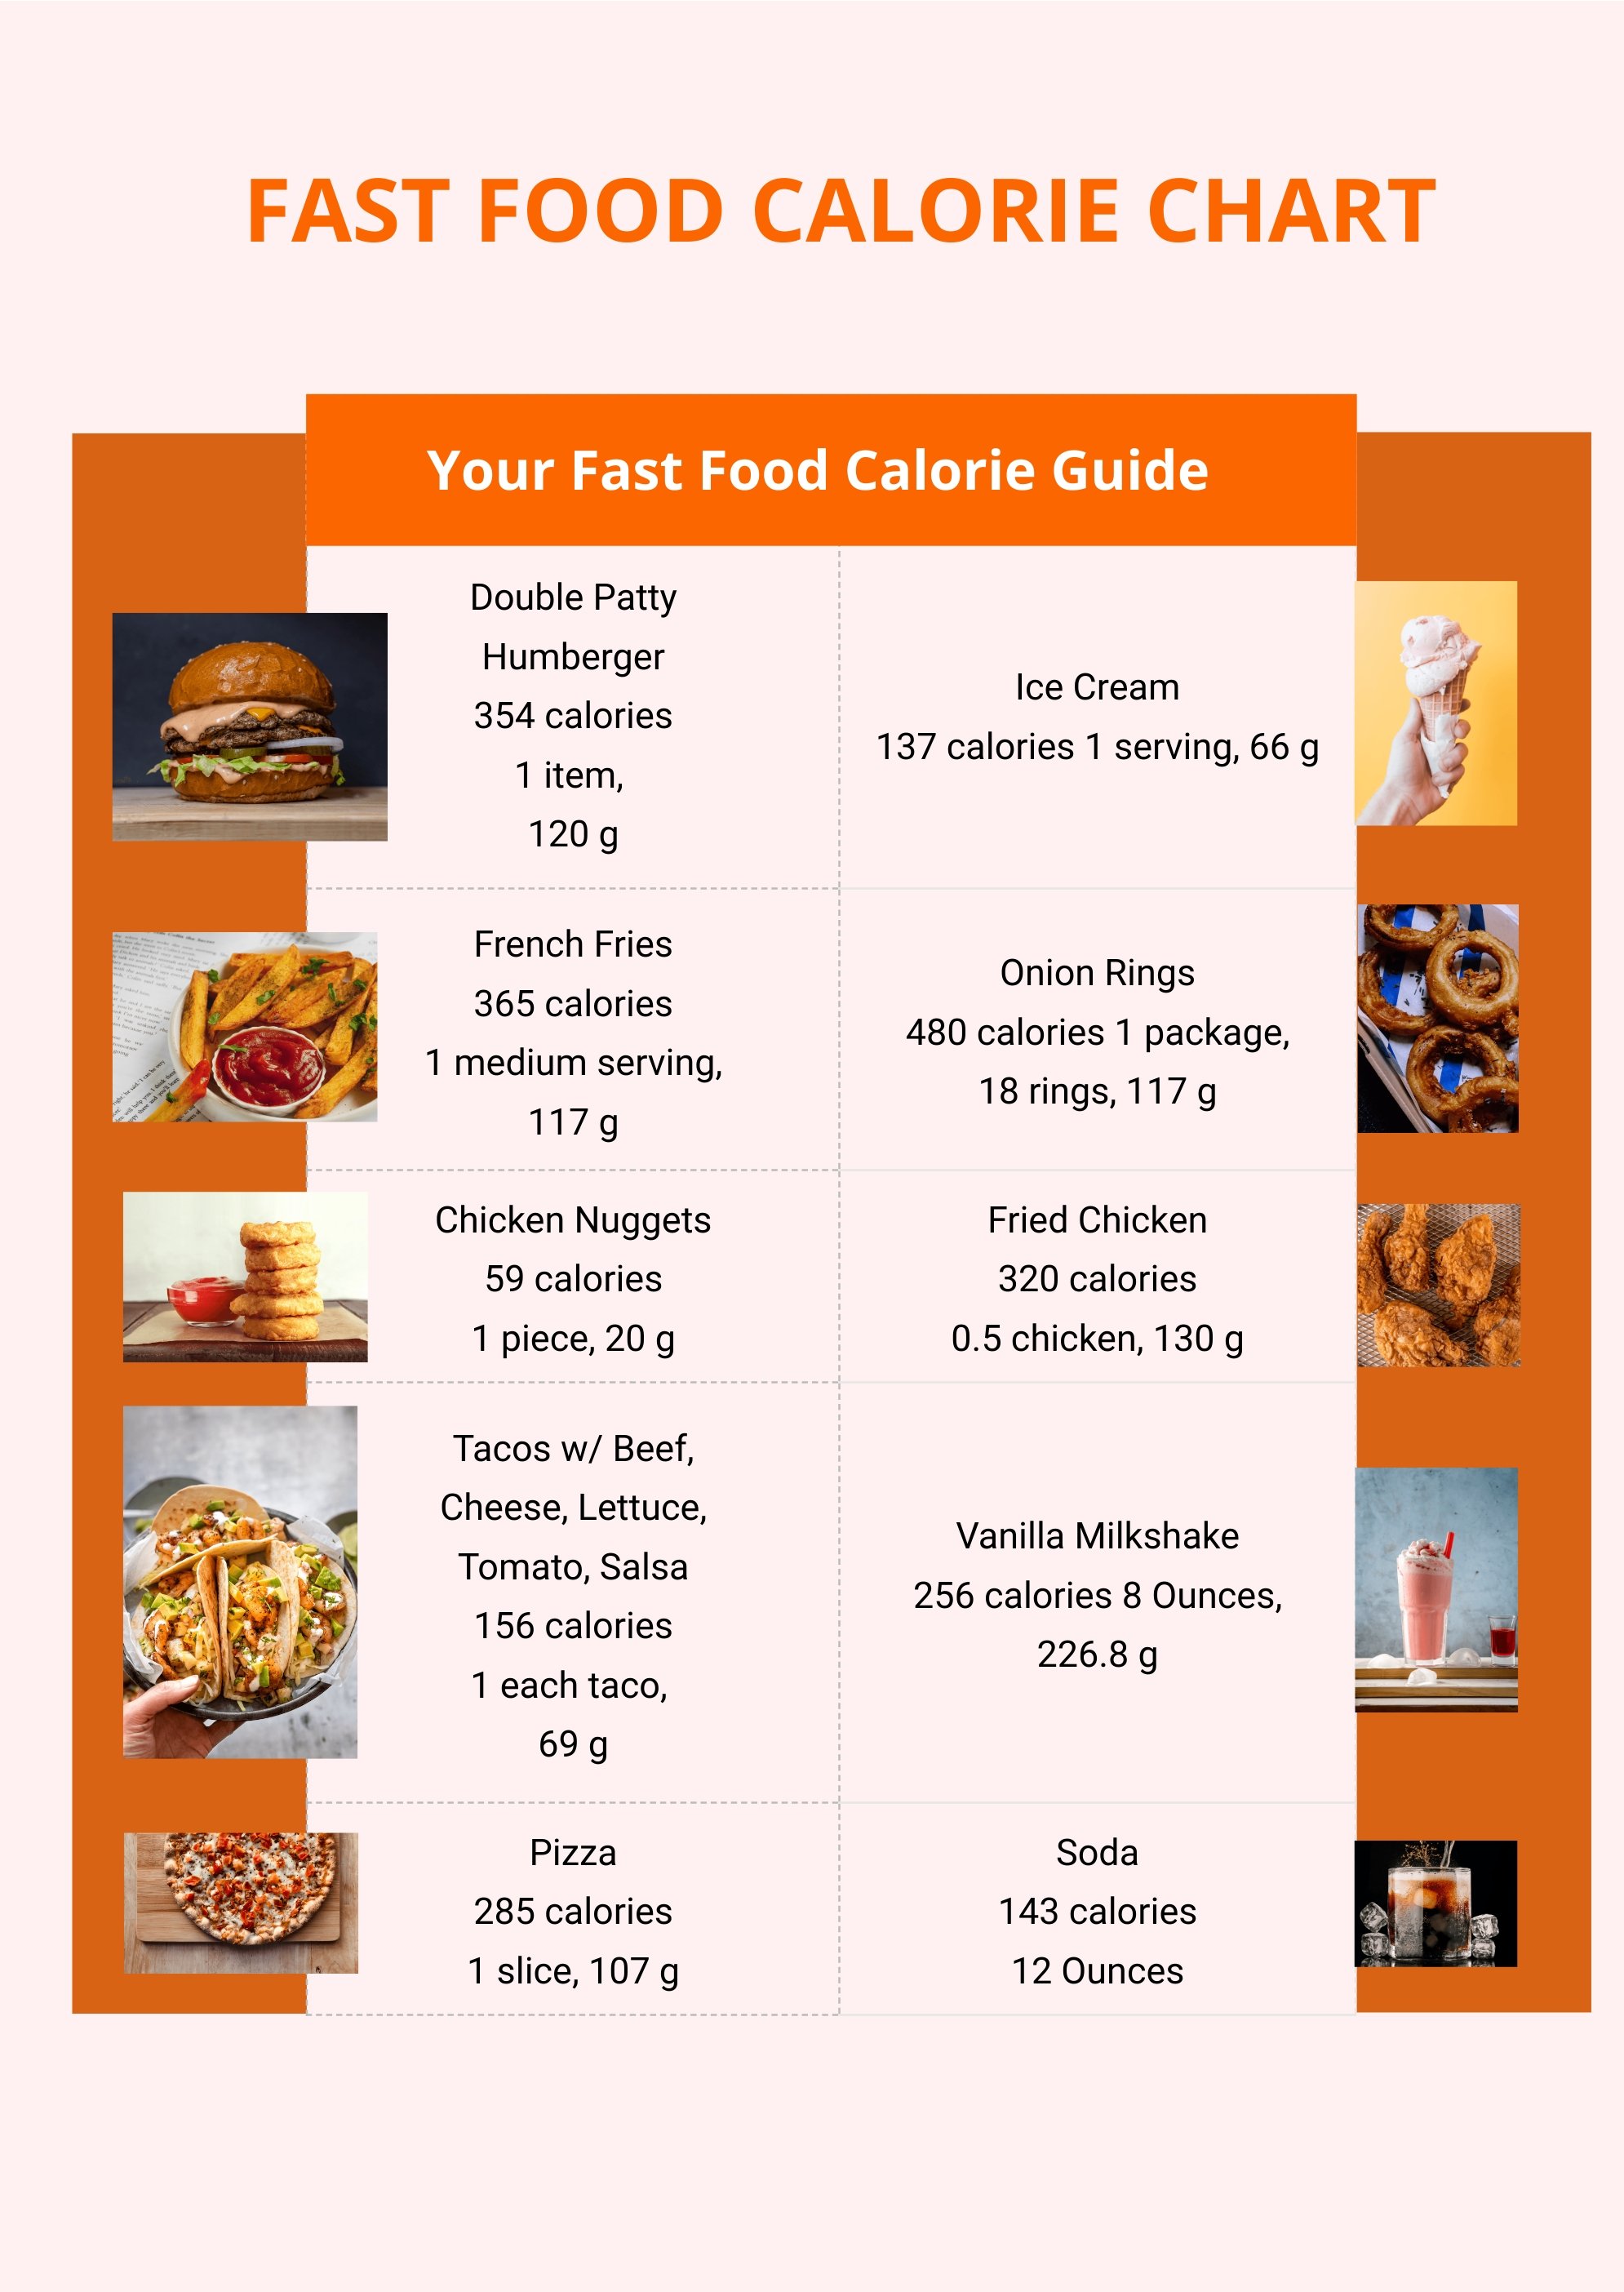 https://images.template.net/116108/fast-food-calorie-chart-1vblb.jpeg